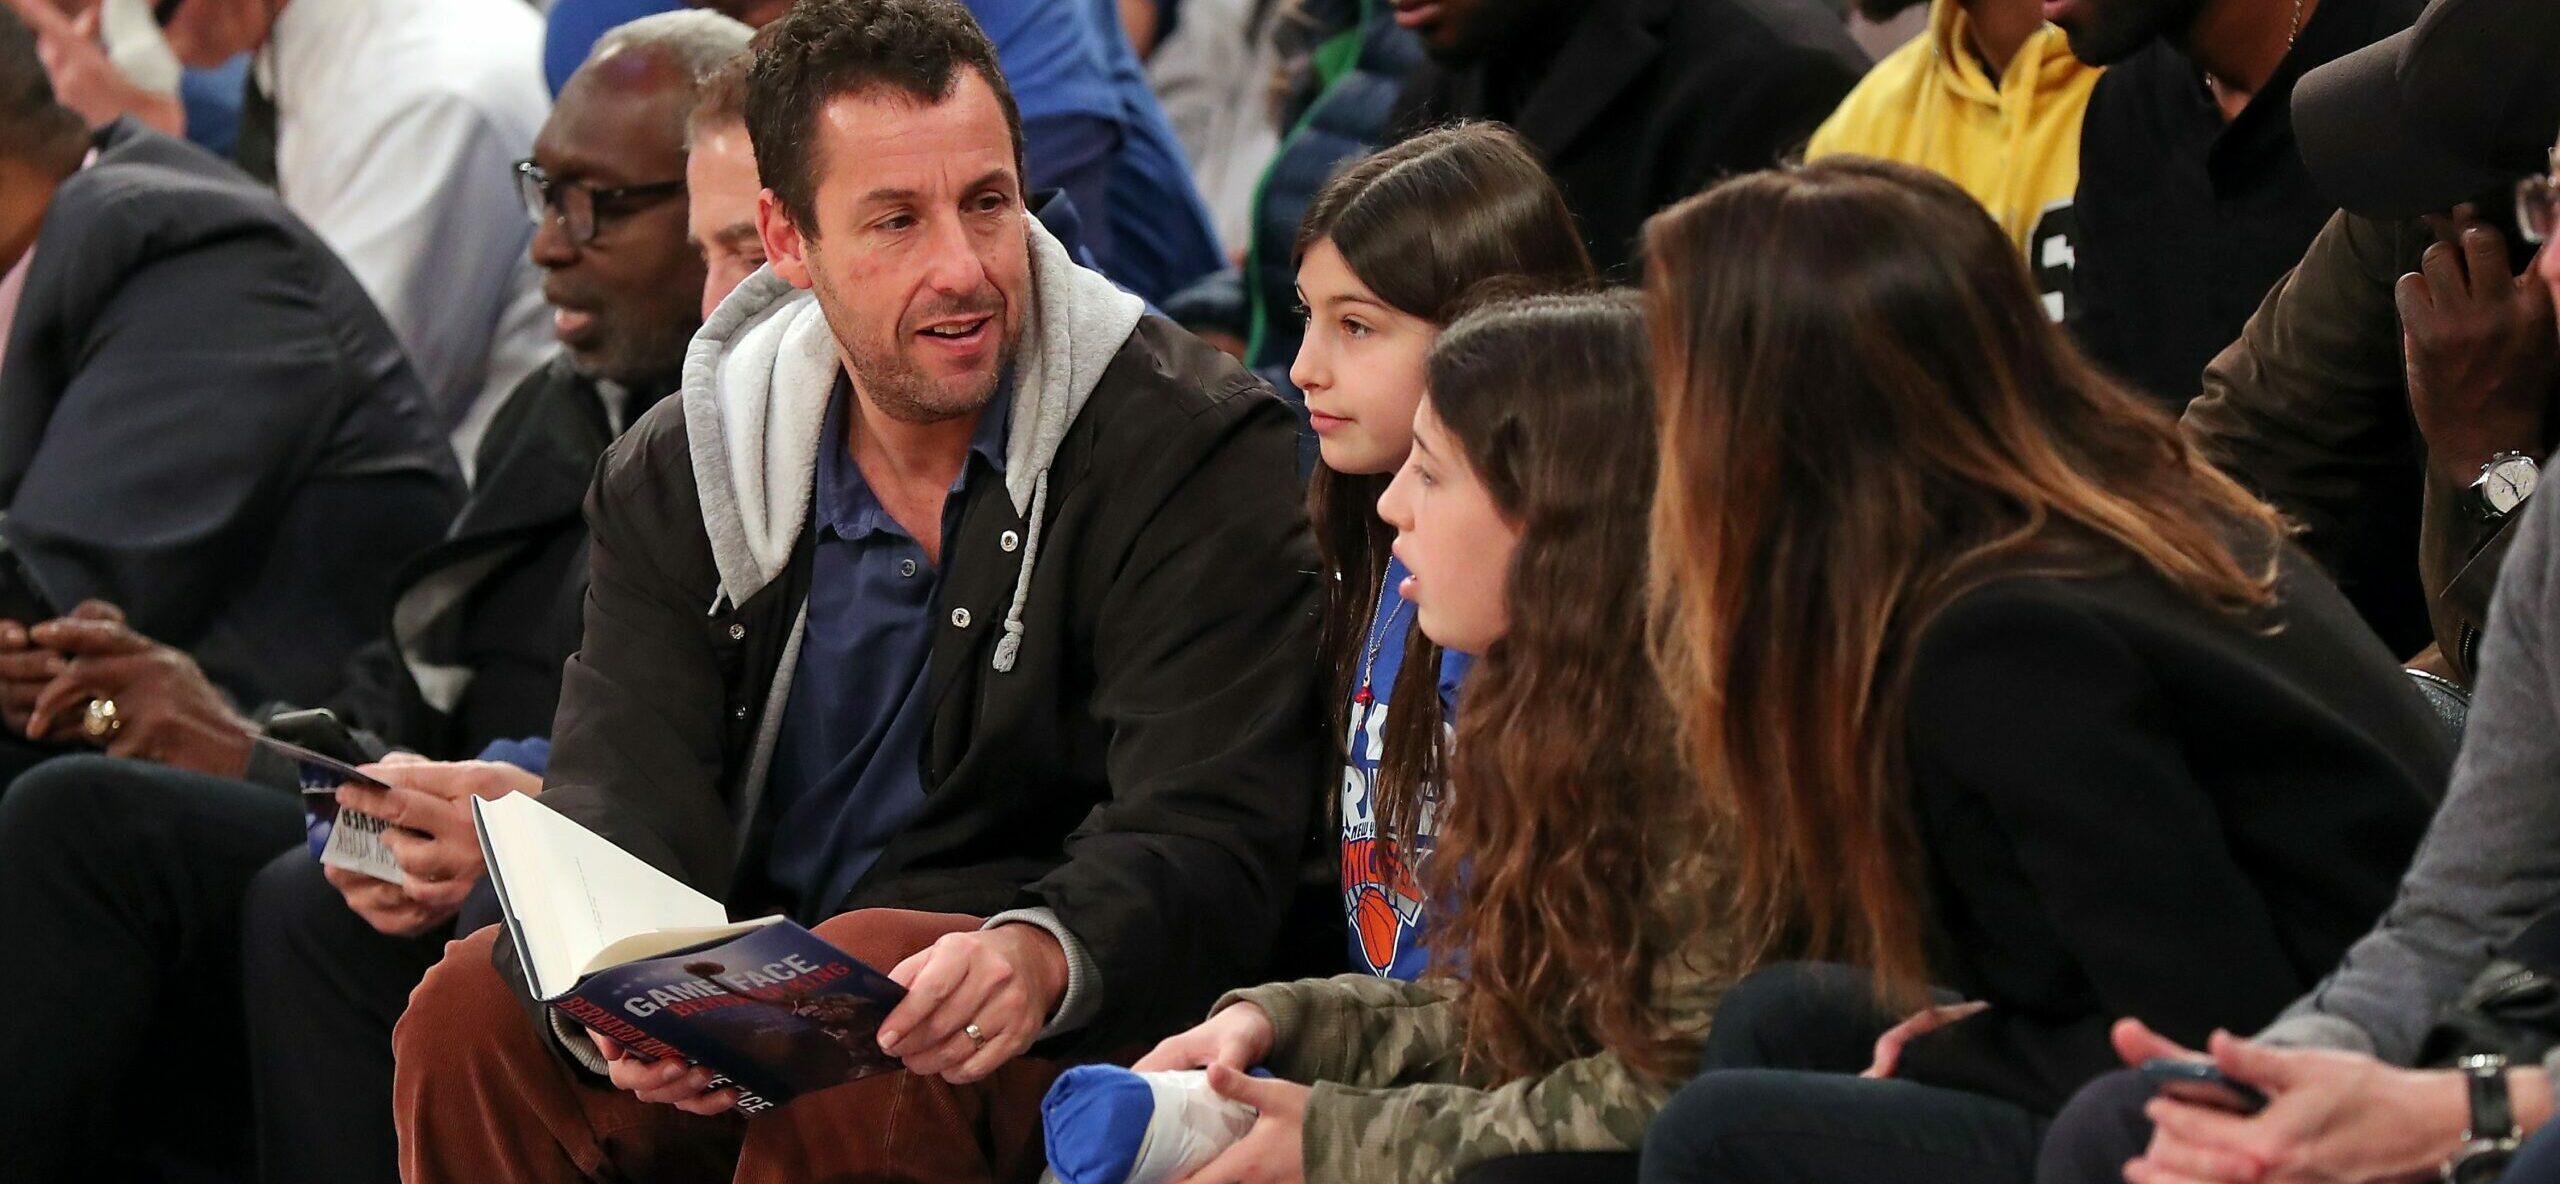 Adam Sandler's Daughters Getting $65K To Star In Dad's New Movie